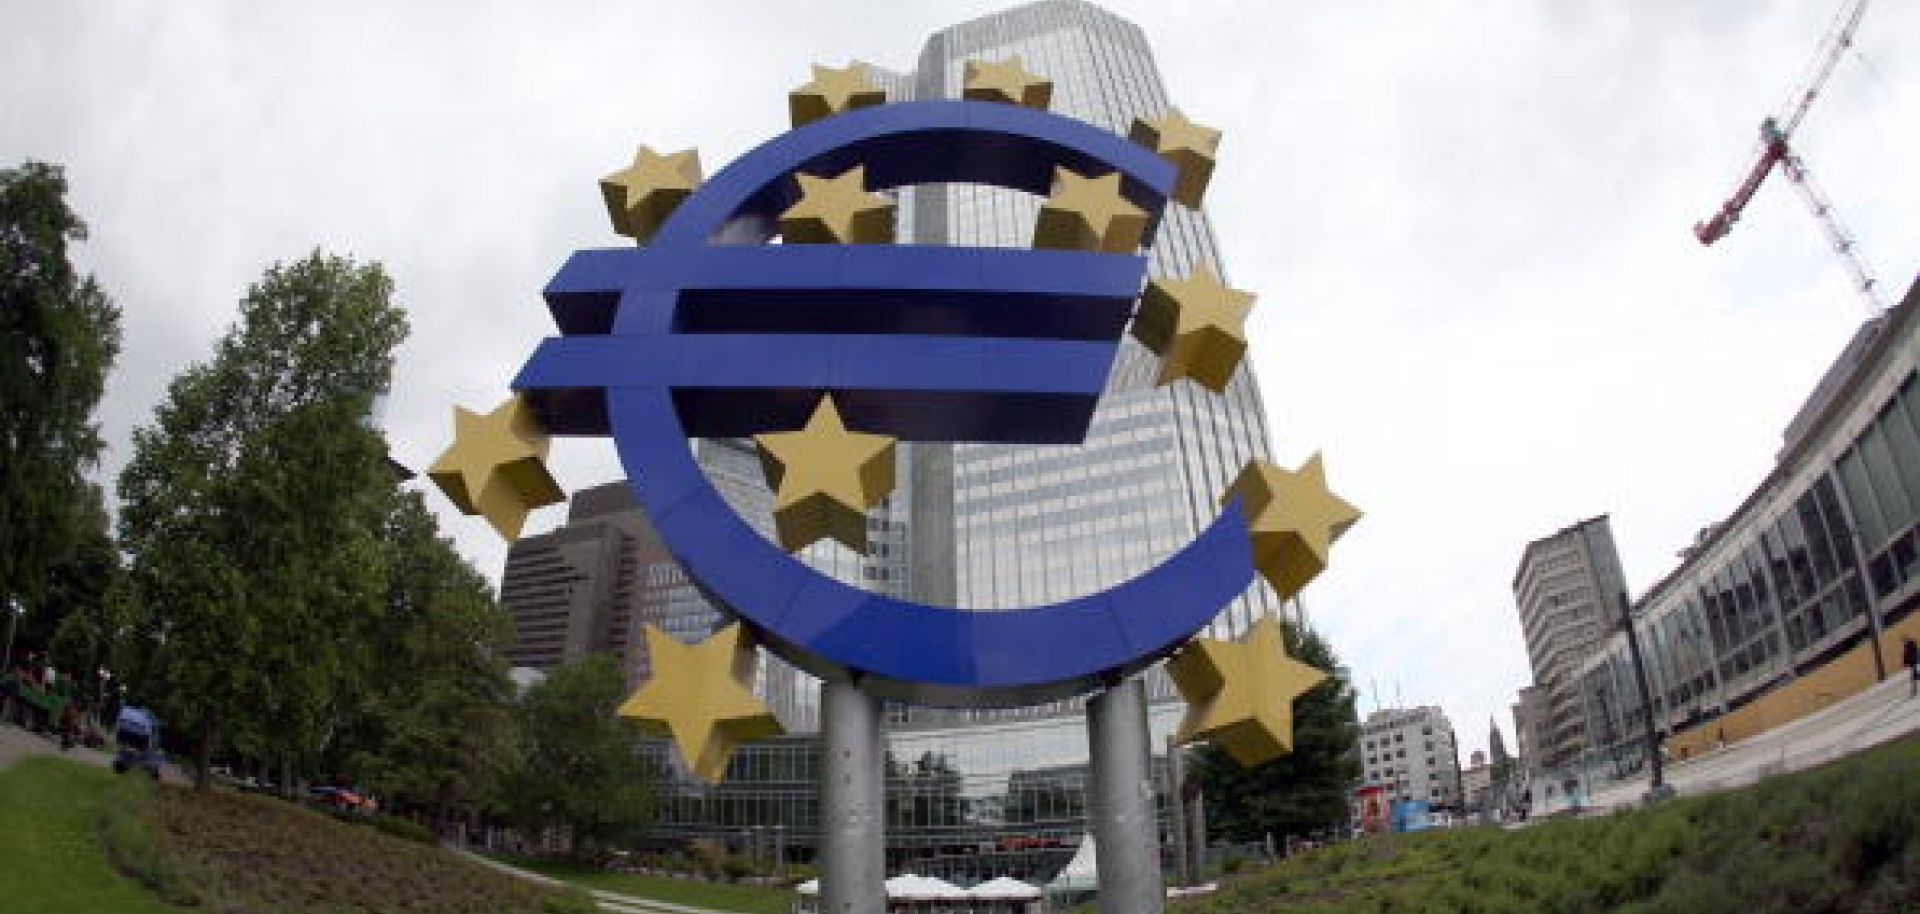 he European Central Bank in Frankfurt, Germany